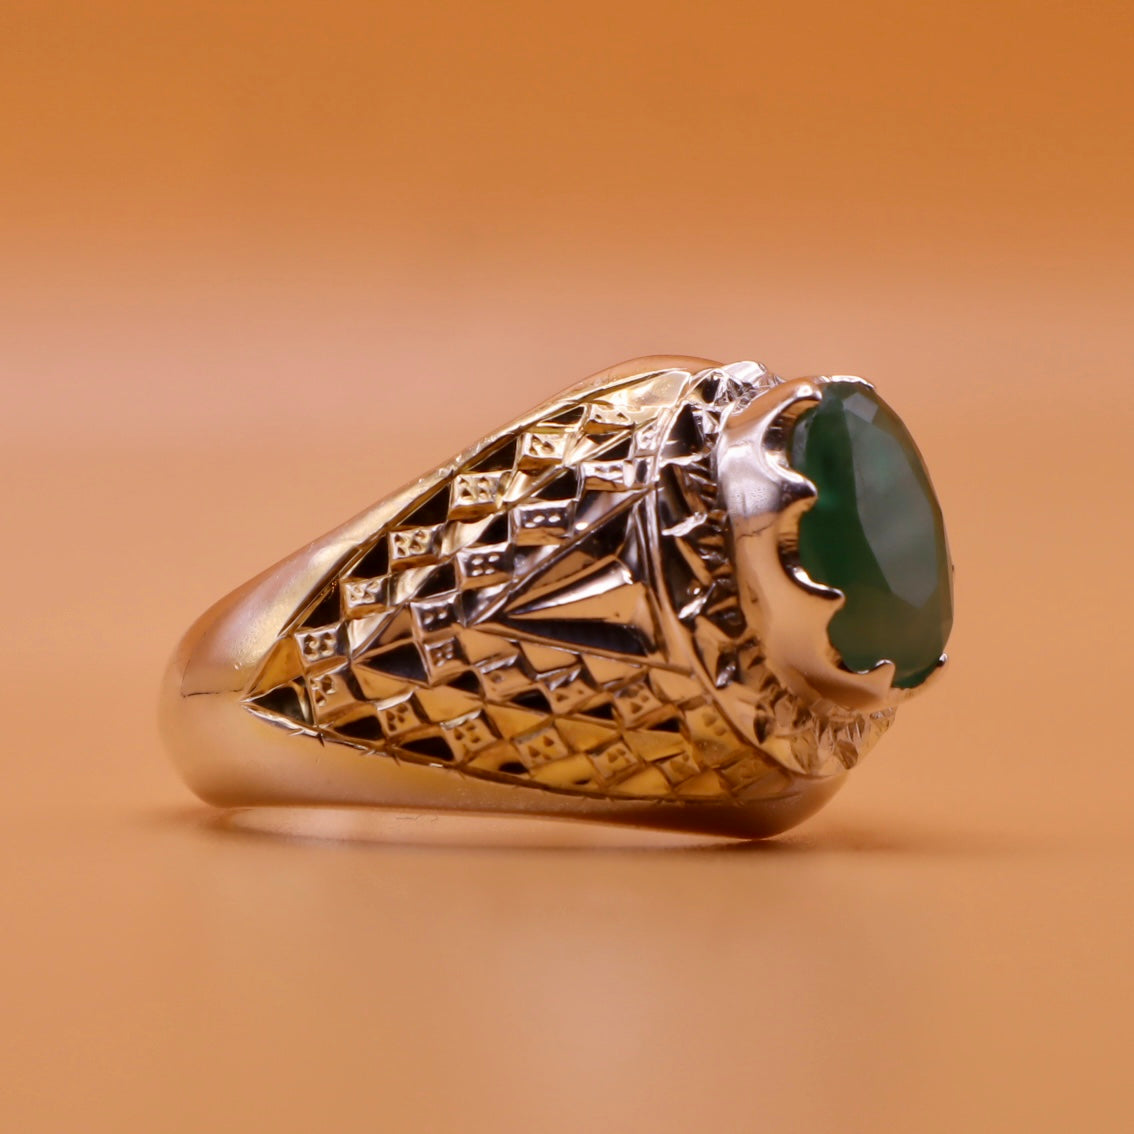 Handmade Persian Sterling Silver Ring with Emerald Gemstone - Al Ali Gems